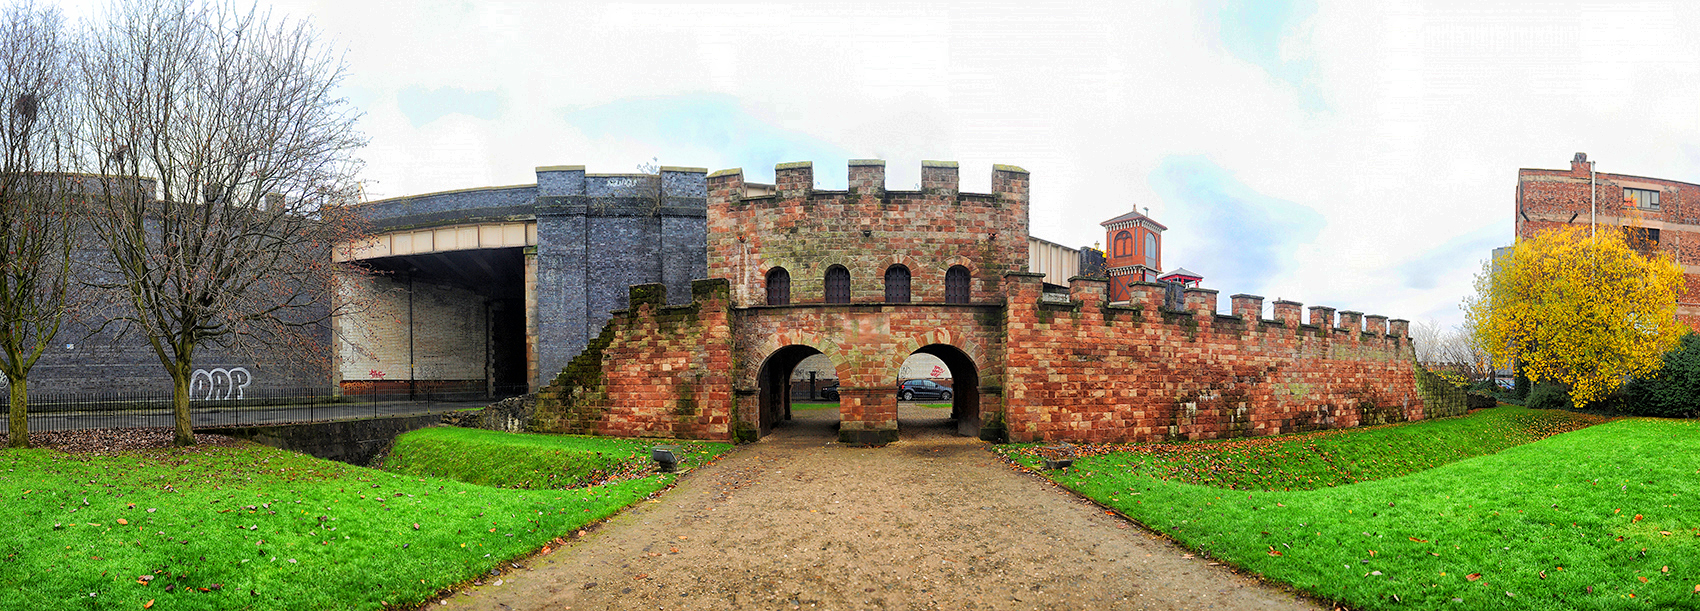 Mamucium Roman fort in Castlefield Urban Heritage Park, Manchester